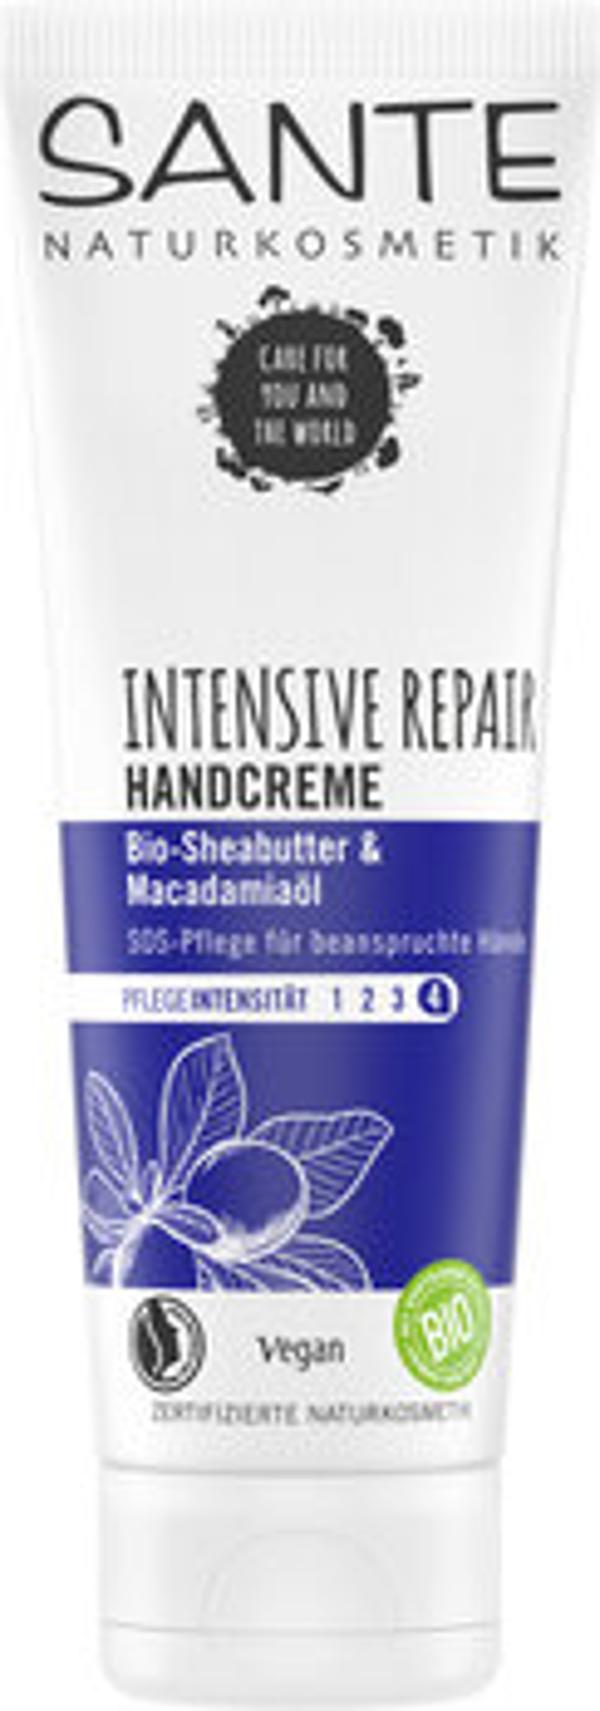 Produktfoto zu INTENSIVE REPAIR Handcreme Sheabutter & Macadamiaöl 75ml